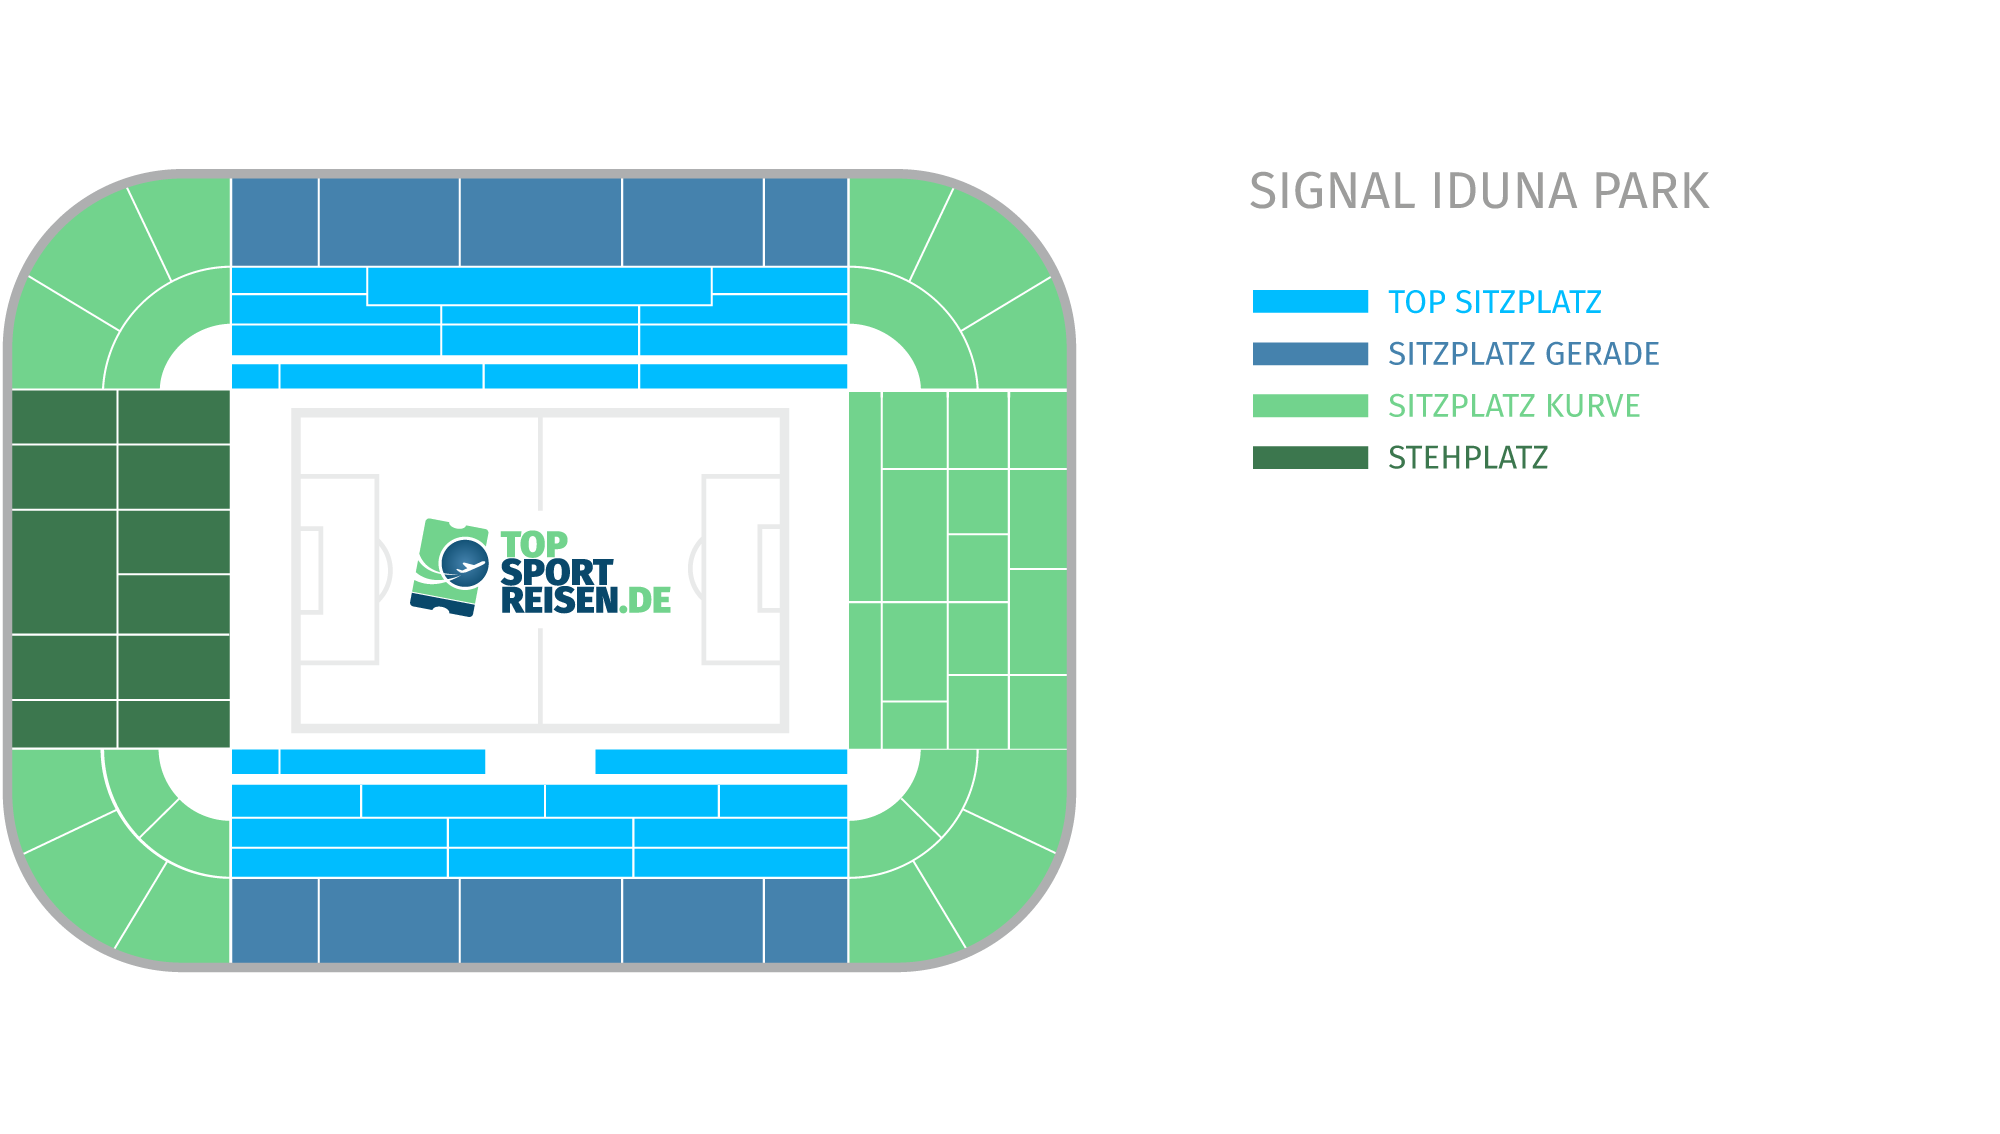 Sitzplan & Kategorien im Signal Iduna Park